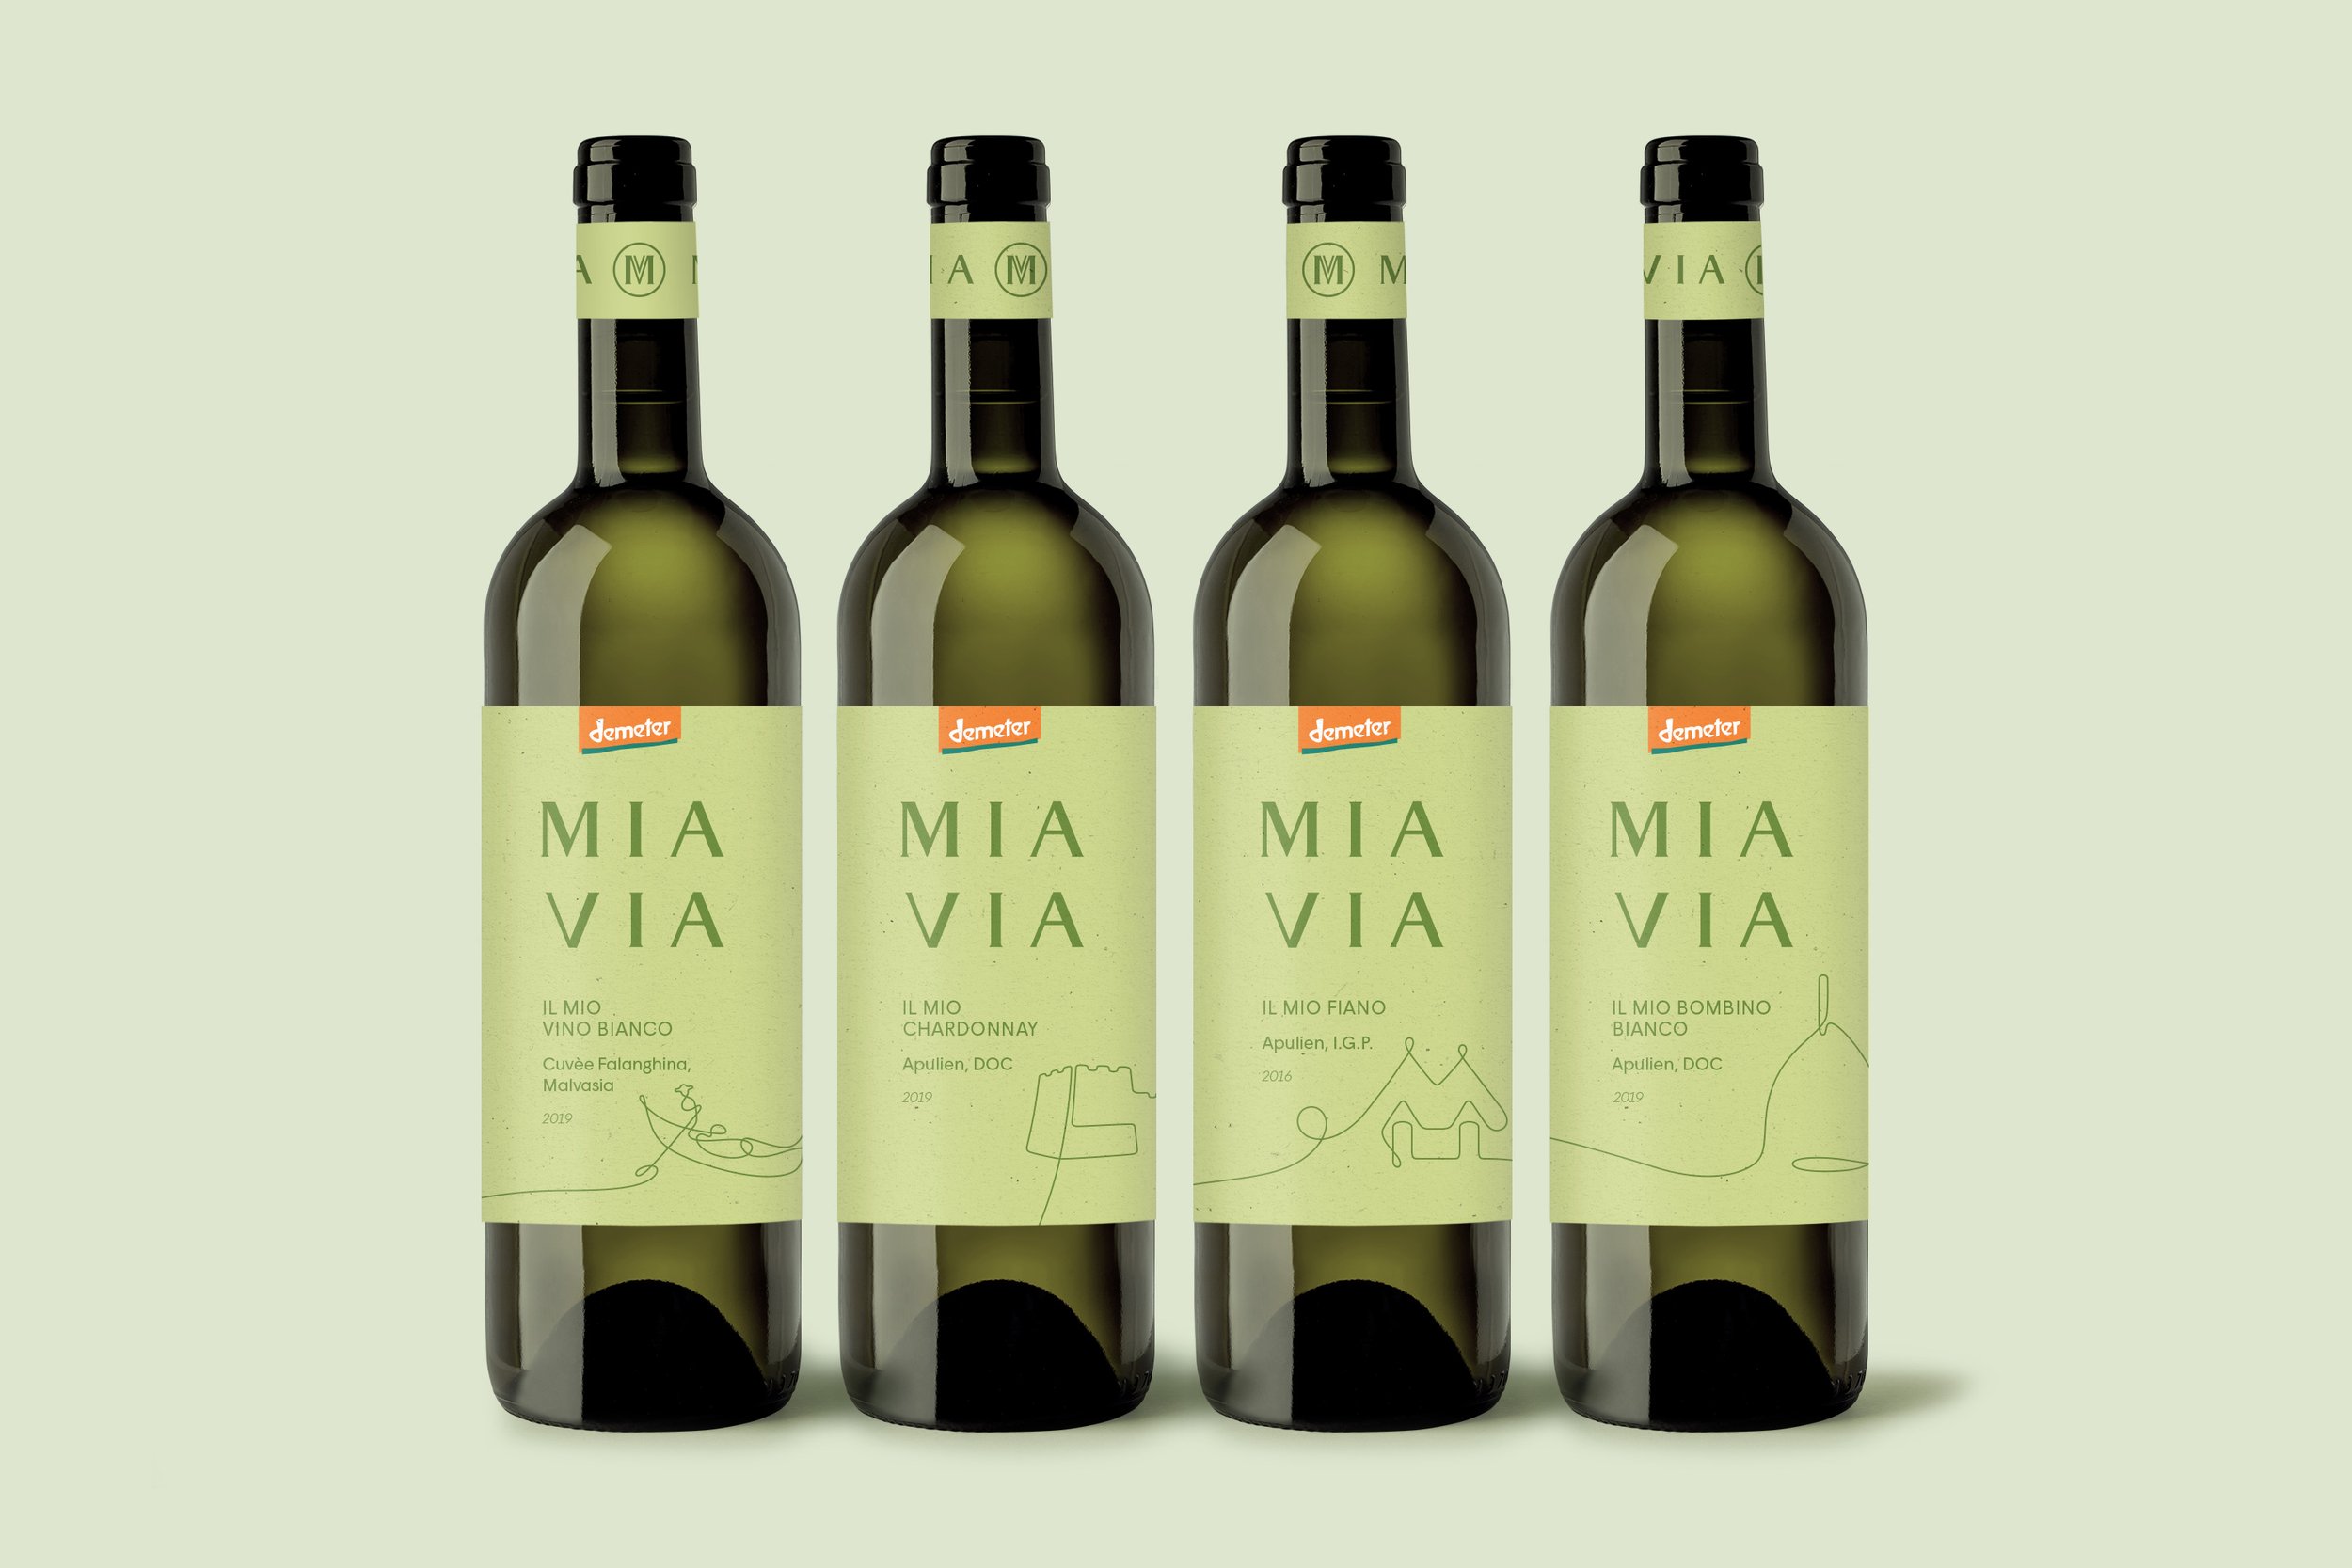 mia-via-white-wine-packaging-design.jpg